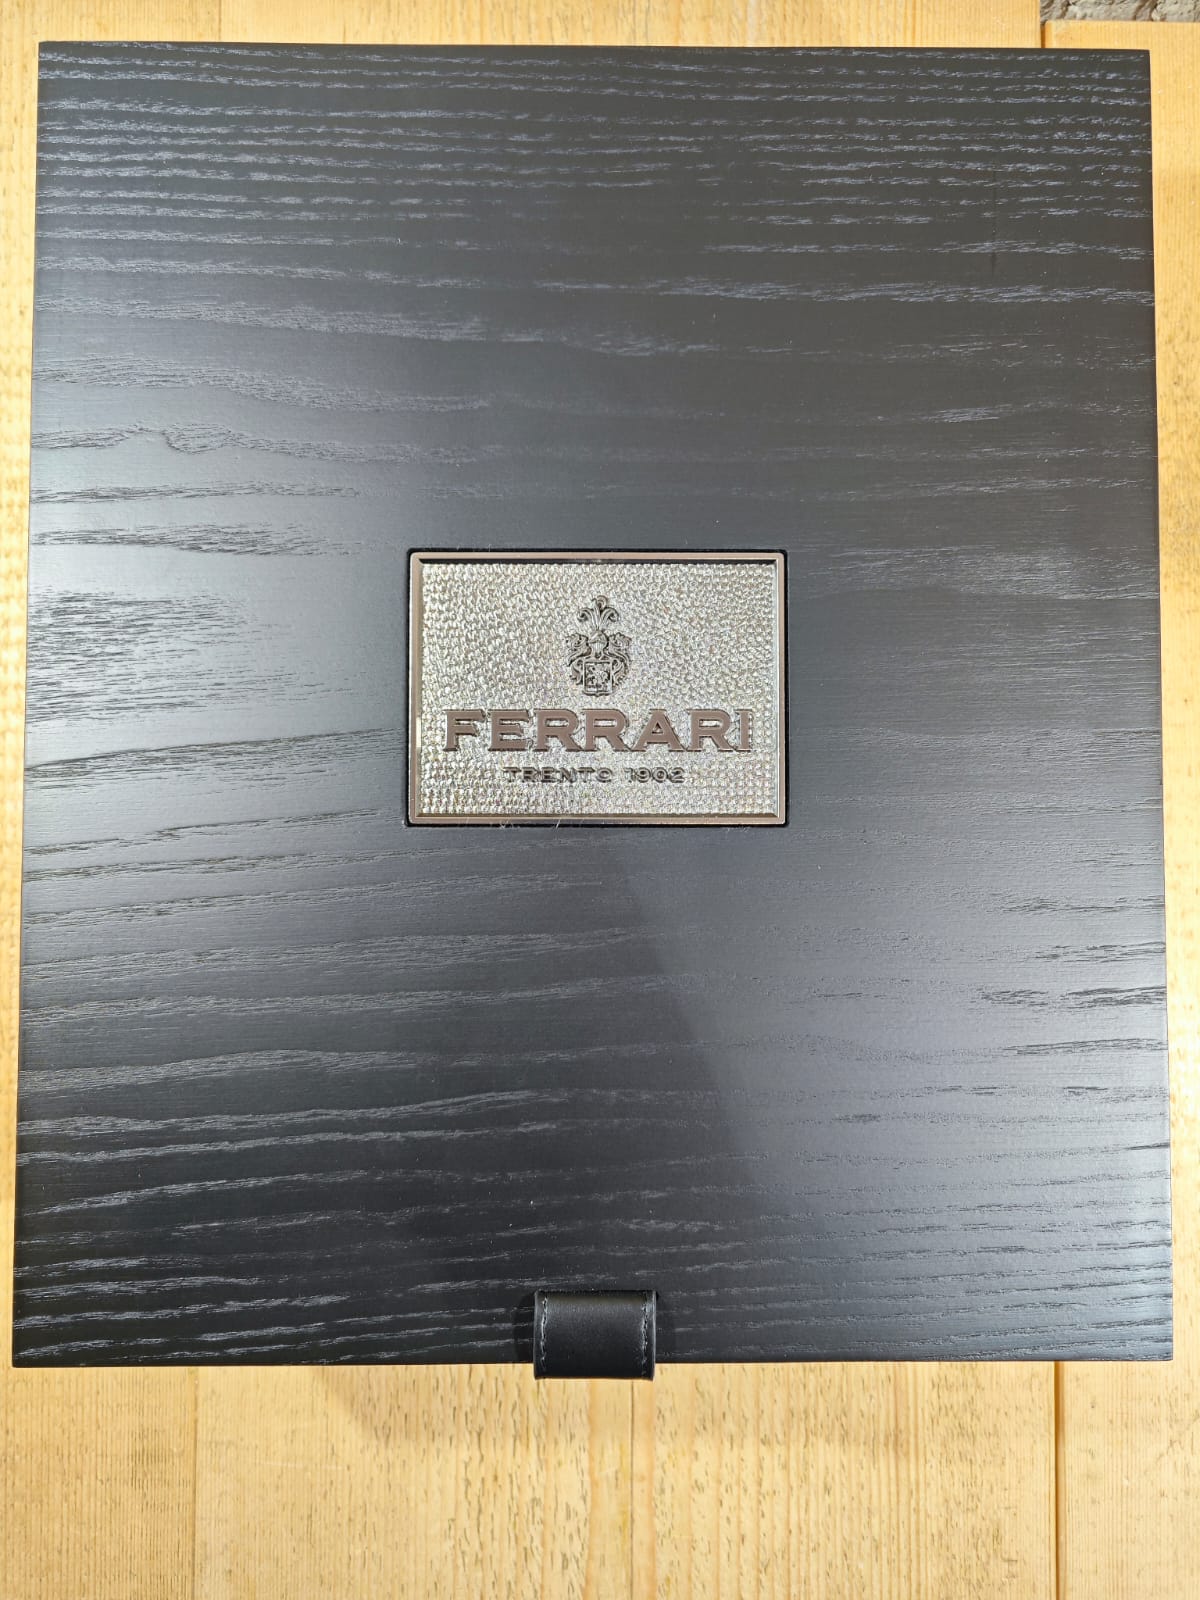 FERRARI Trento Riserva DOC "Perlé Nero" Sboccatura Recente 2003,2004,2005 - Ferrari (cassetta 1+1+1)